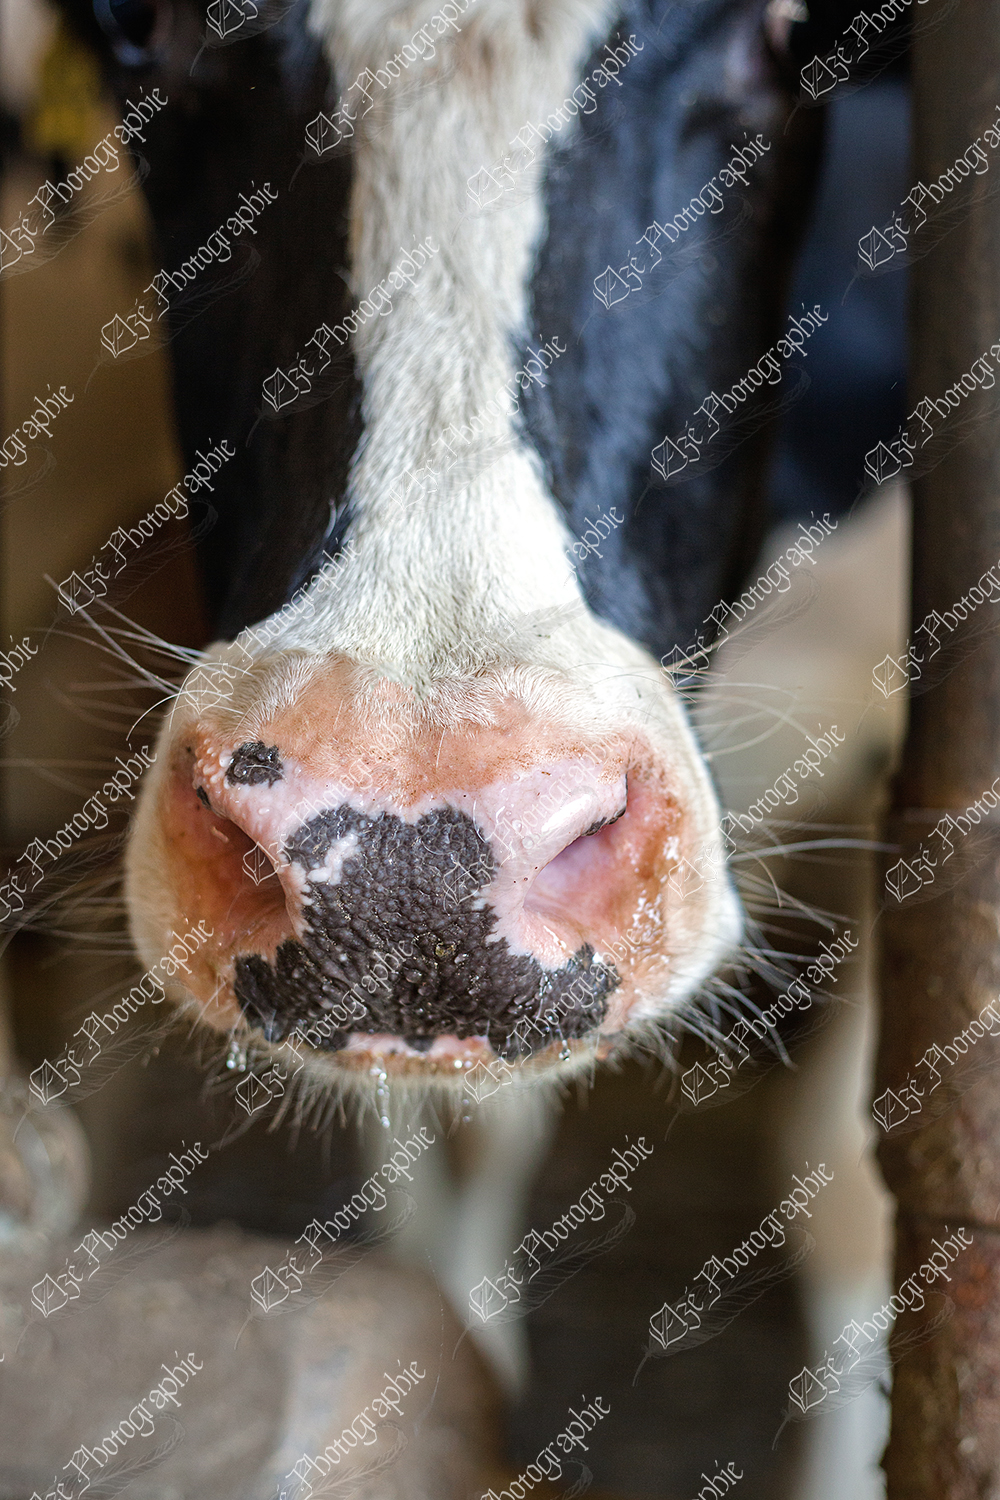 elze_photo_8603_nez_salive_vache_nose_of_cow_holstein